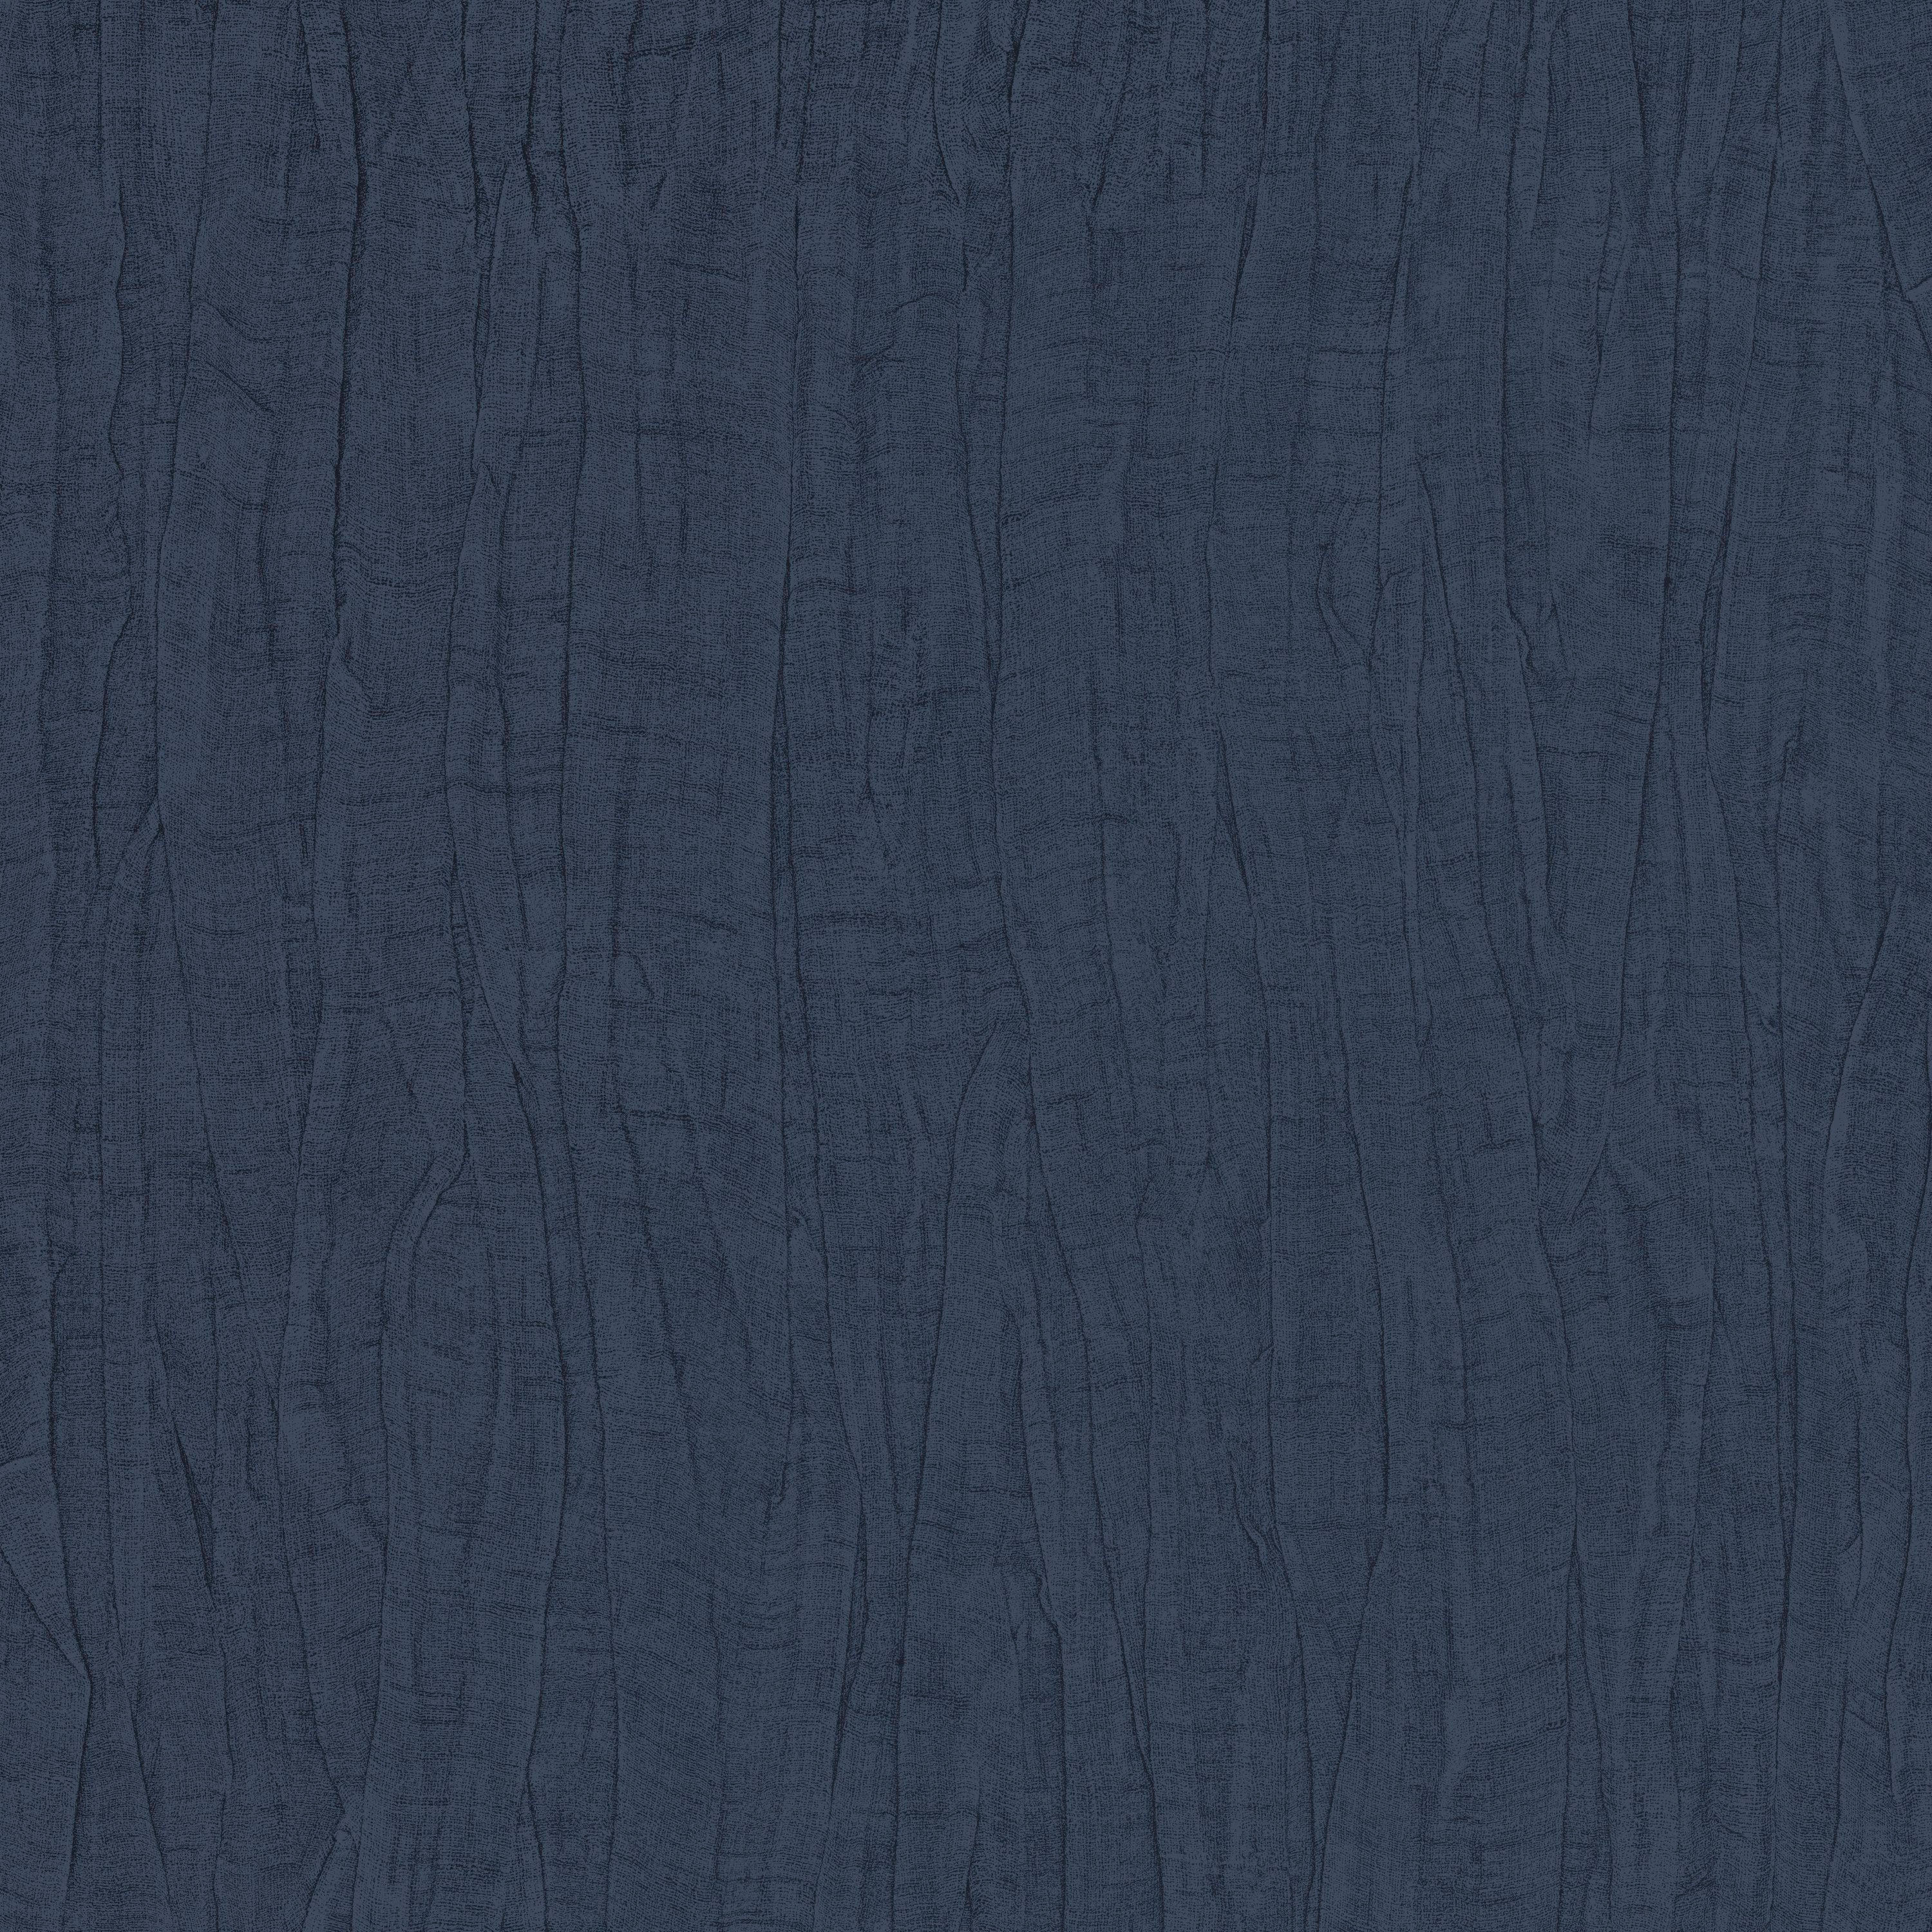 VLIESTAPETE  - Blau, Basics, Papier/Kunststoff (52/1000cm)